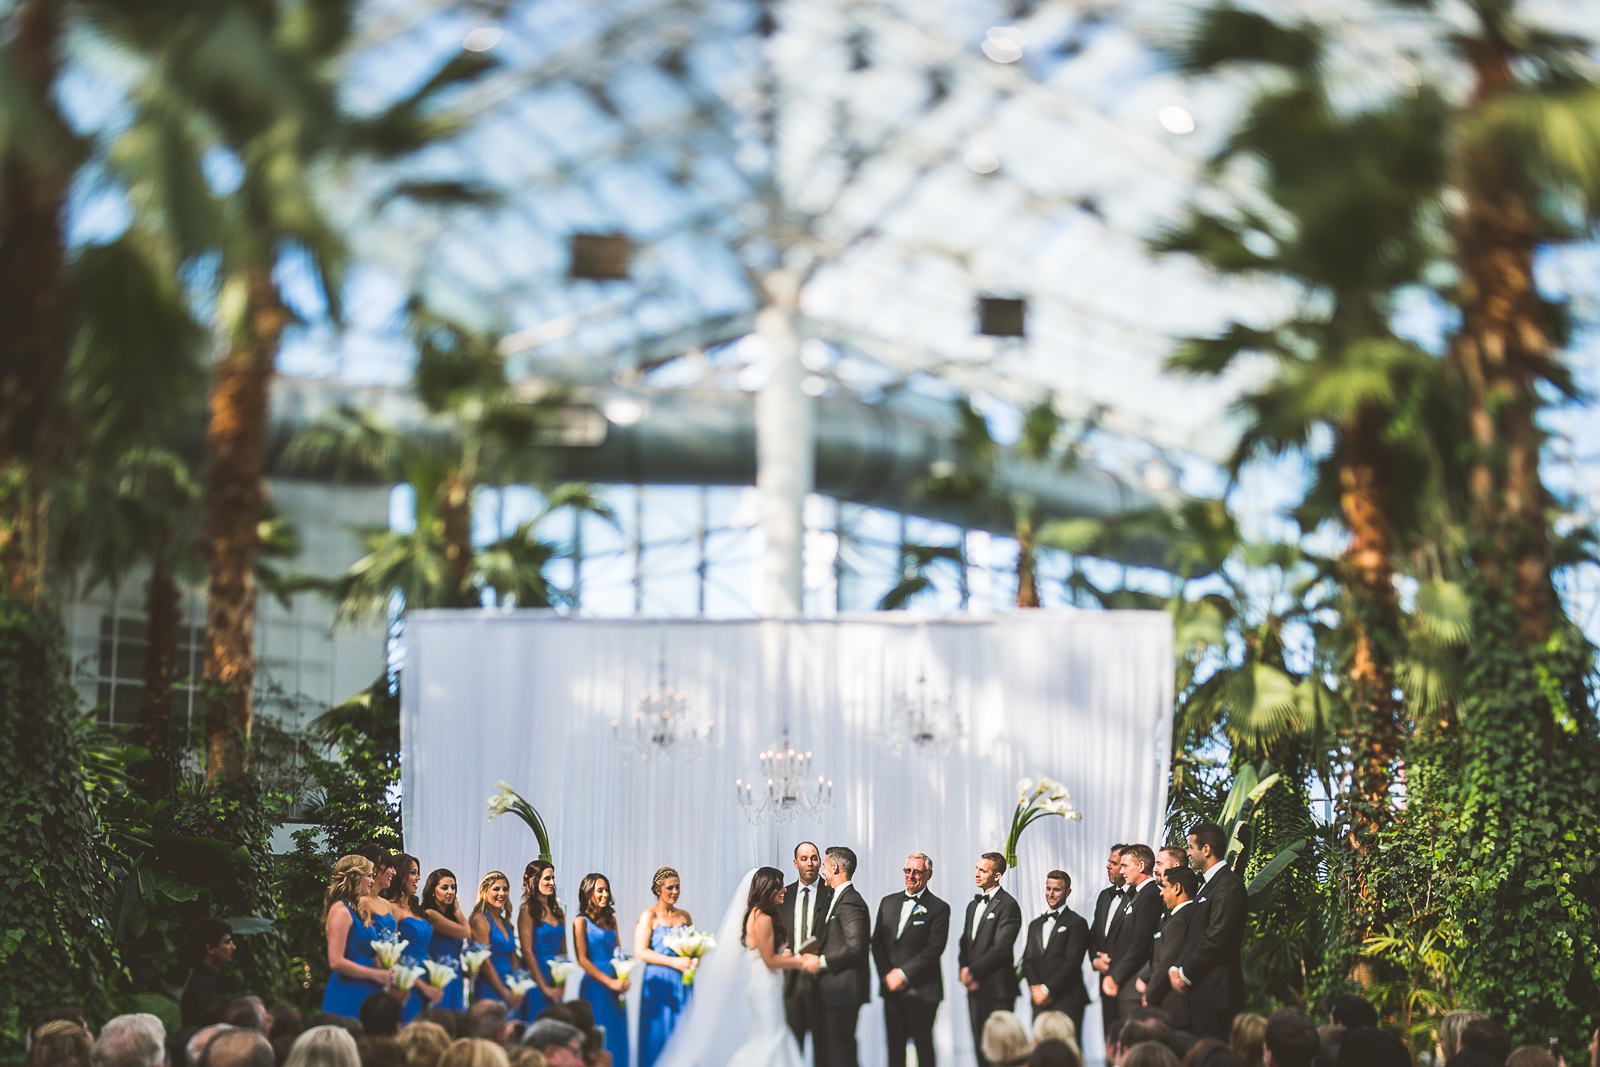 49 bridal party at wedding - Marisa + Chris // Chicago Wedding Photos at Navy Pier Crystal Garden